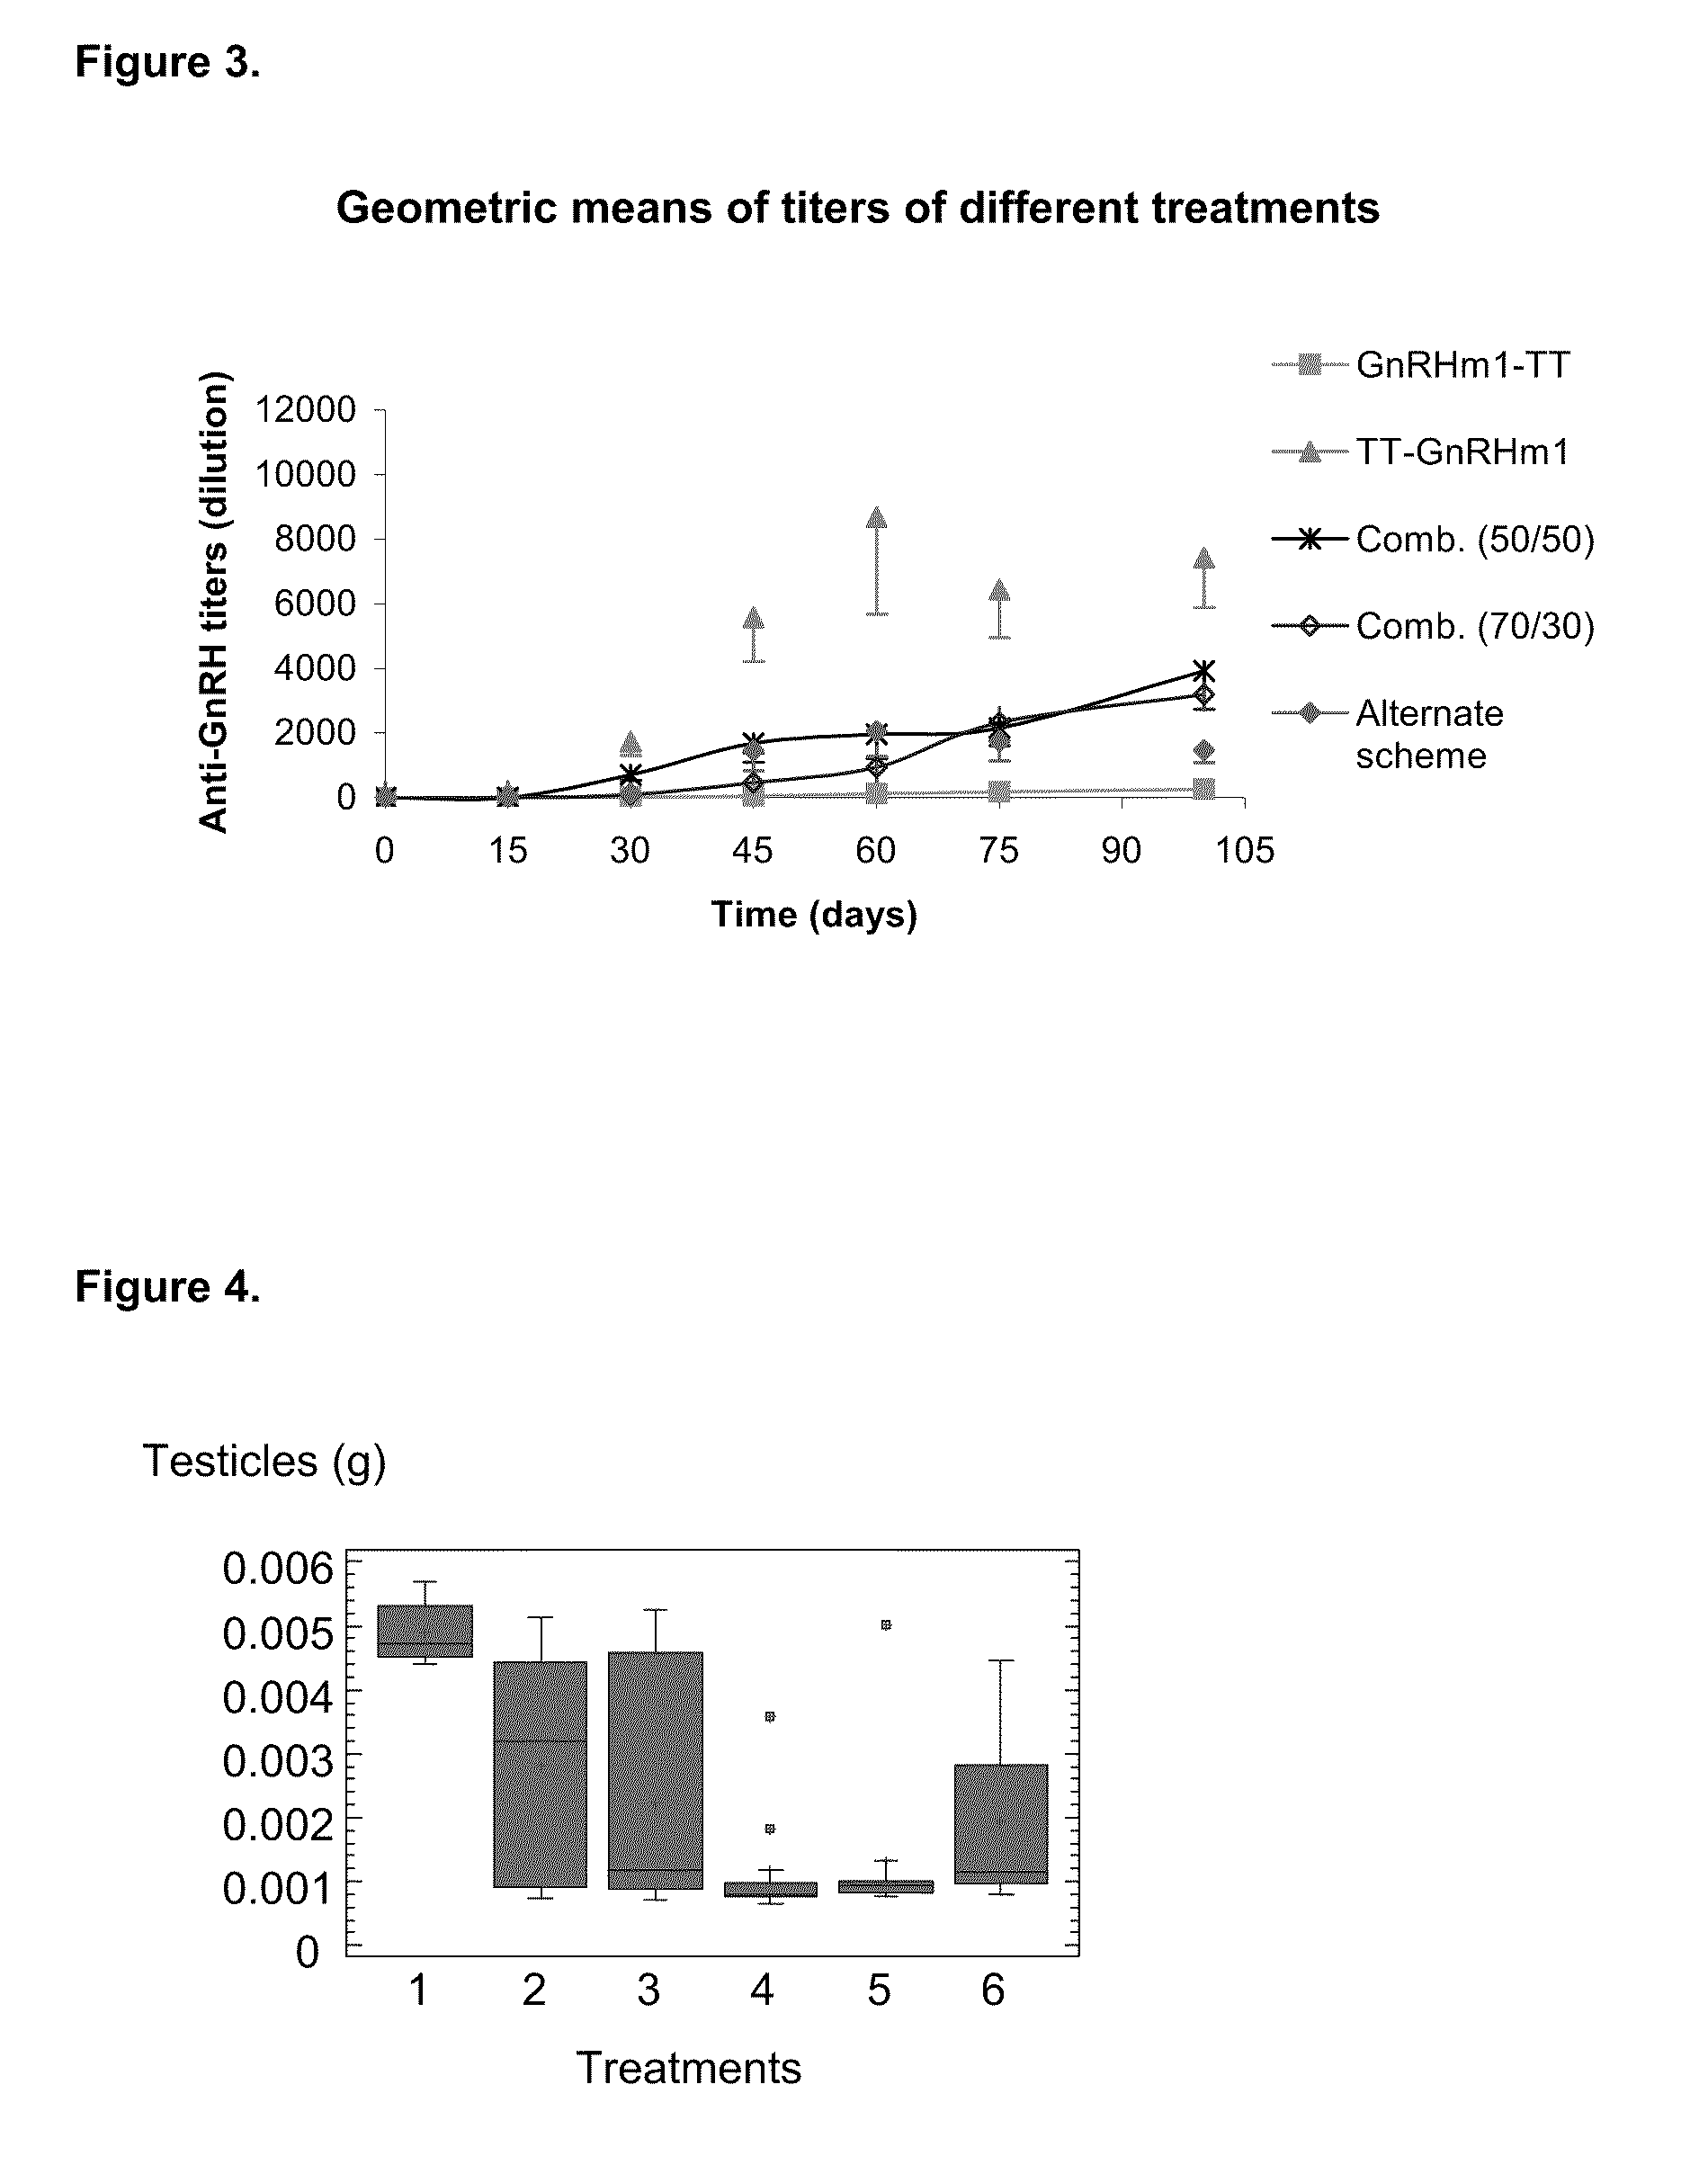 Pharmaceutical composition using gonadotropin - releasing hormone (GNRH) combined variants as immunogen